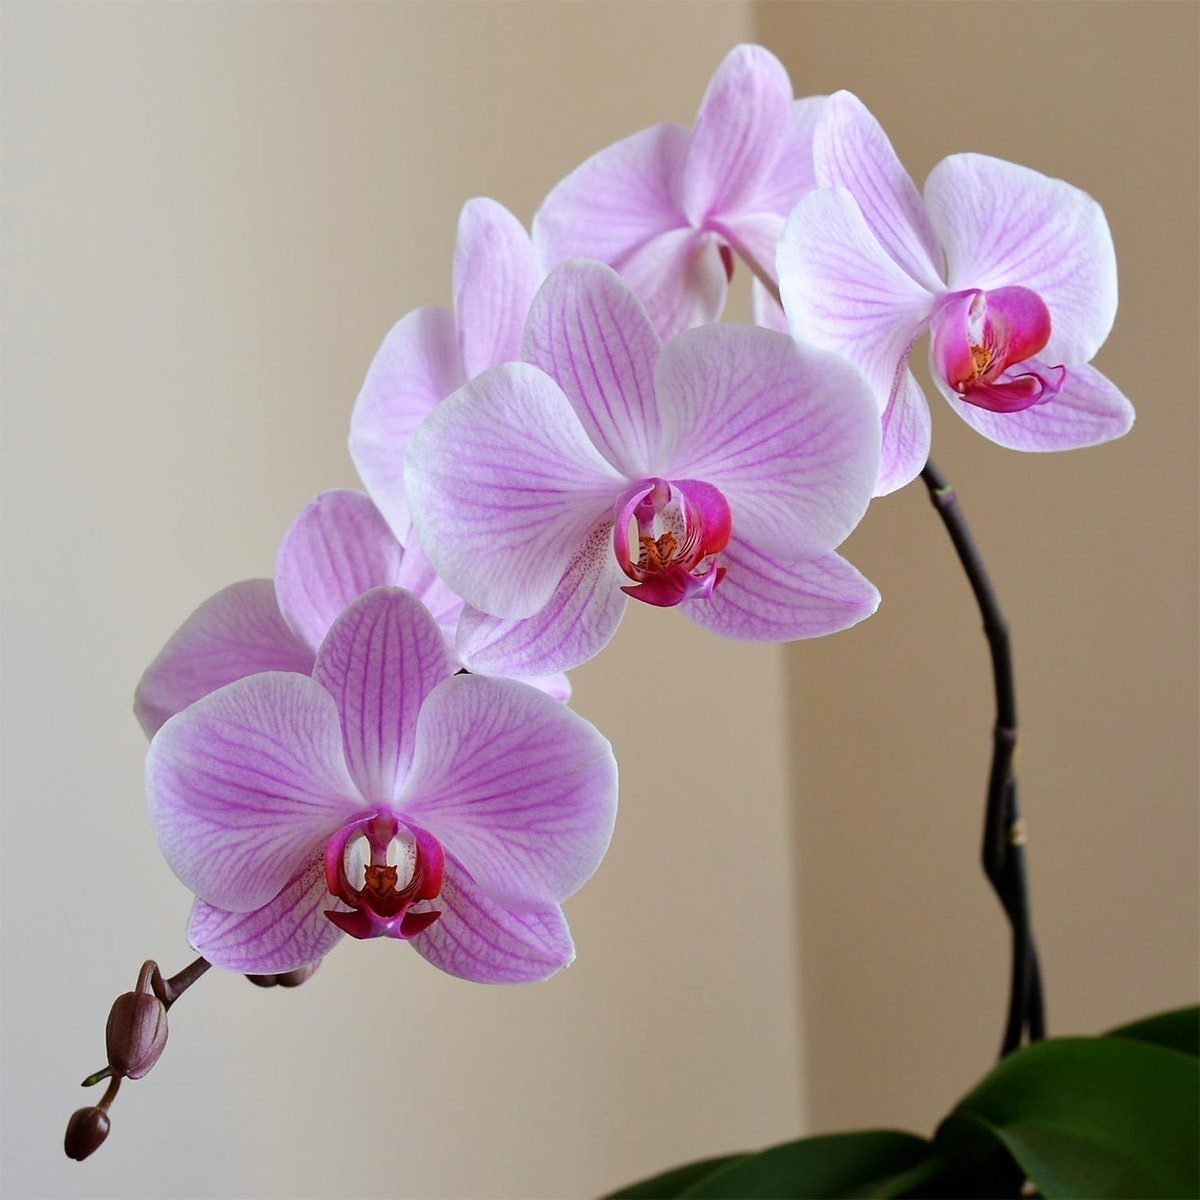 Concime per Orchidee - Agribios - Vendita Online